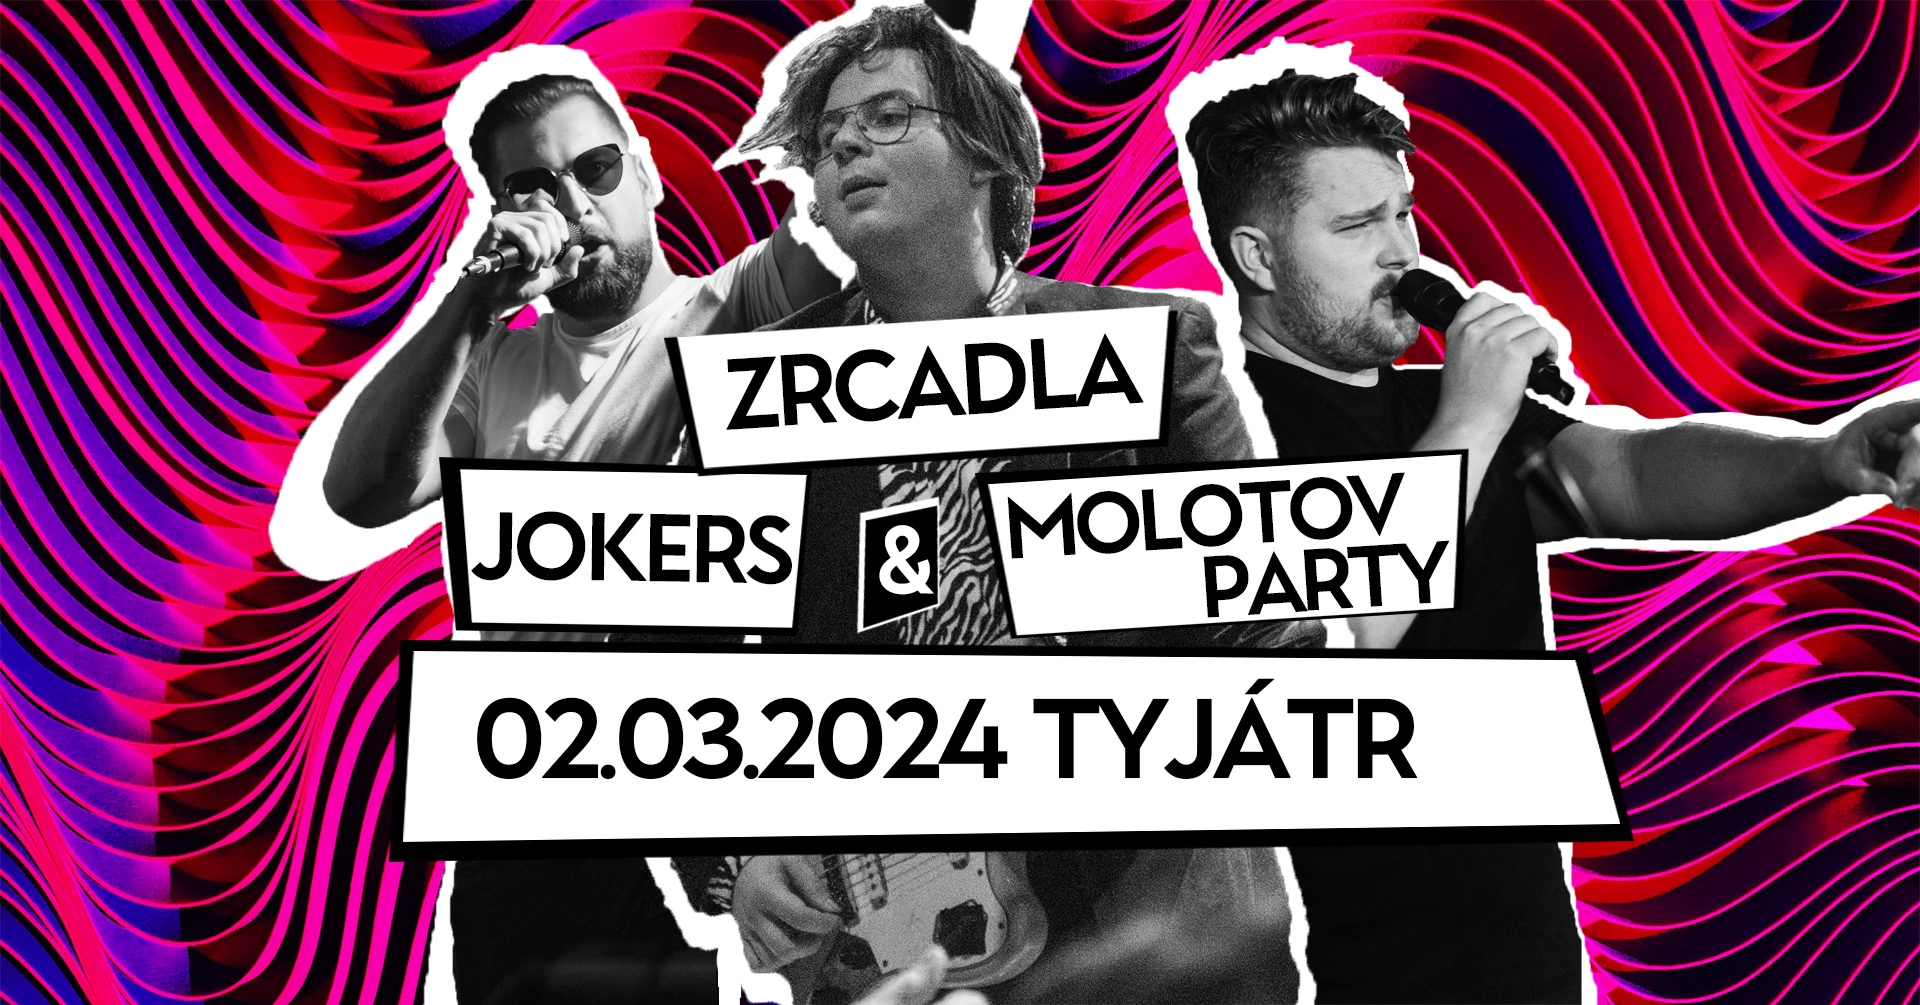 zrcadla-jokers-molotov-party